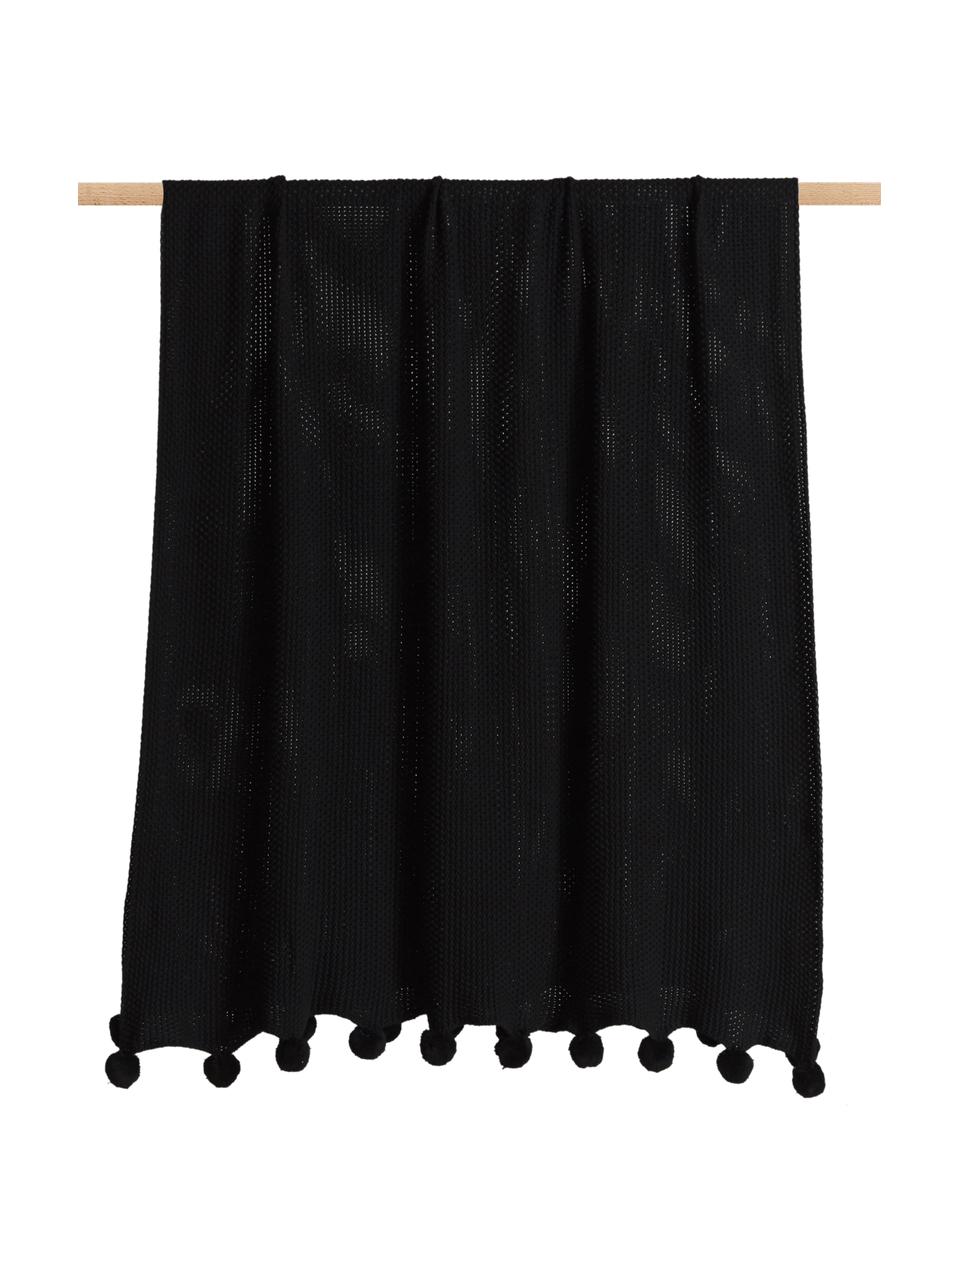 Gebreide plaid Molly met pompoms in zwart, 100% katoen, Zwart, B 130 x L 170 cm